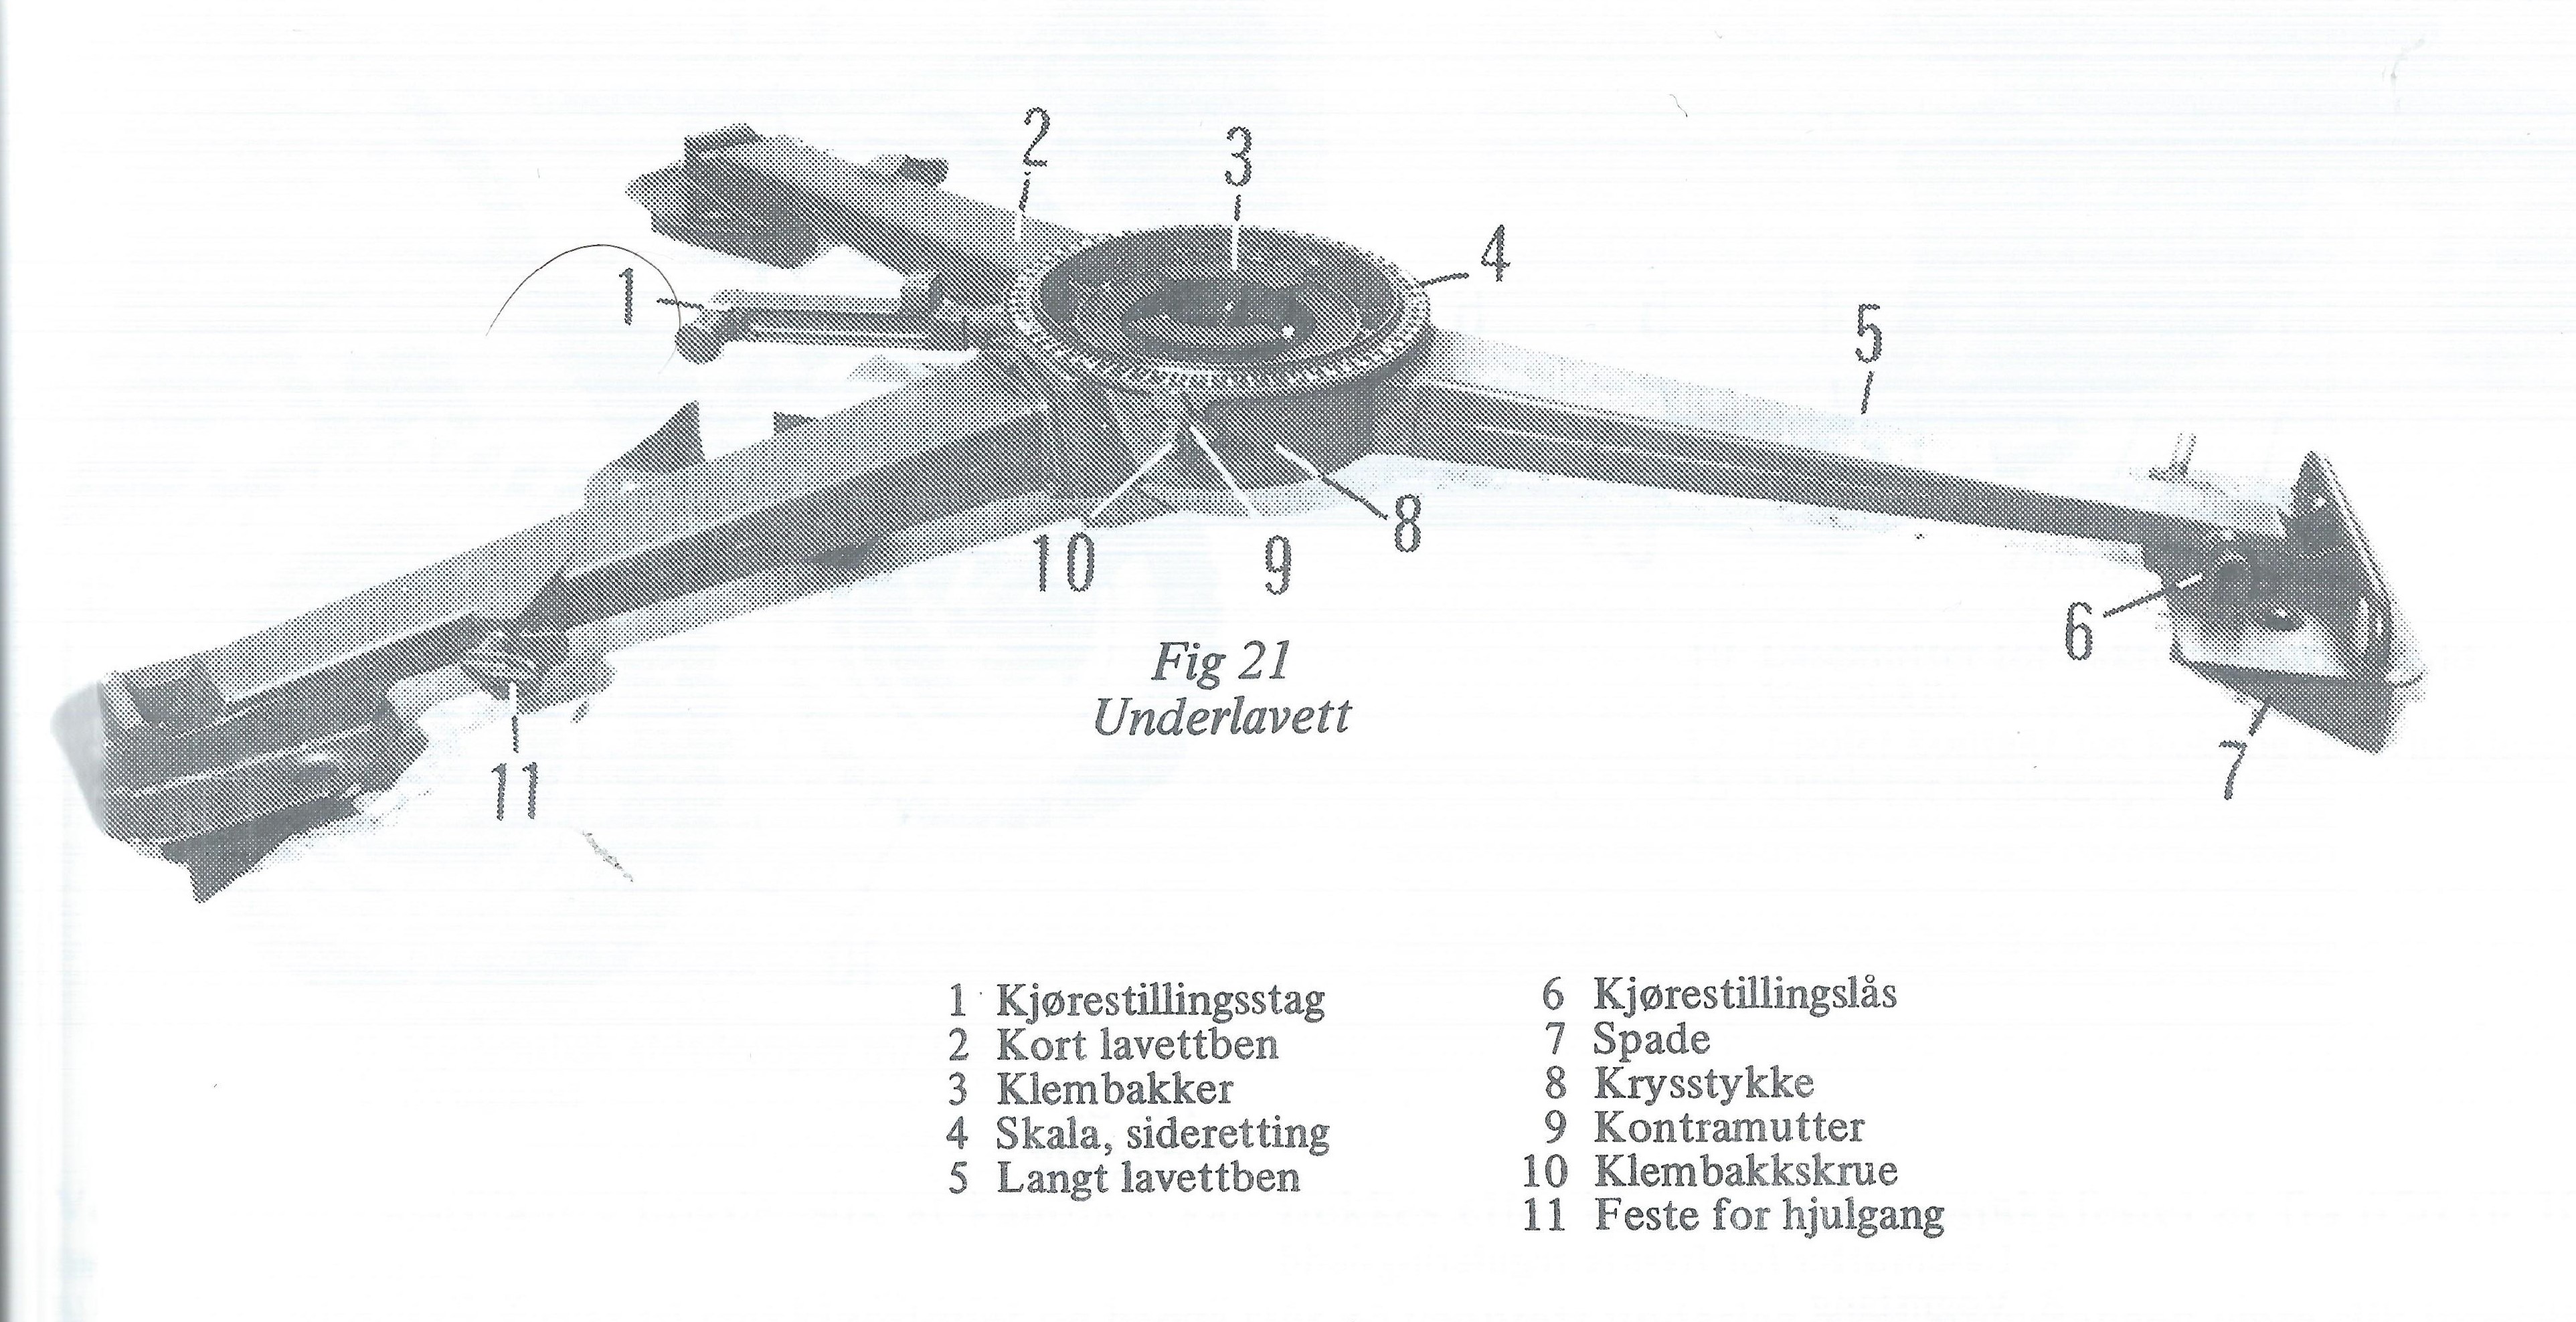 ./guns/kanon/bilder/Kanon-Rheinmetall-Kongsberg-Luftvern-NM45-20mm-13.jpg